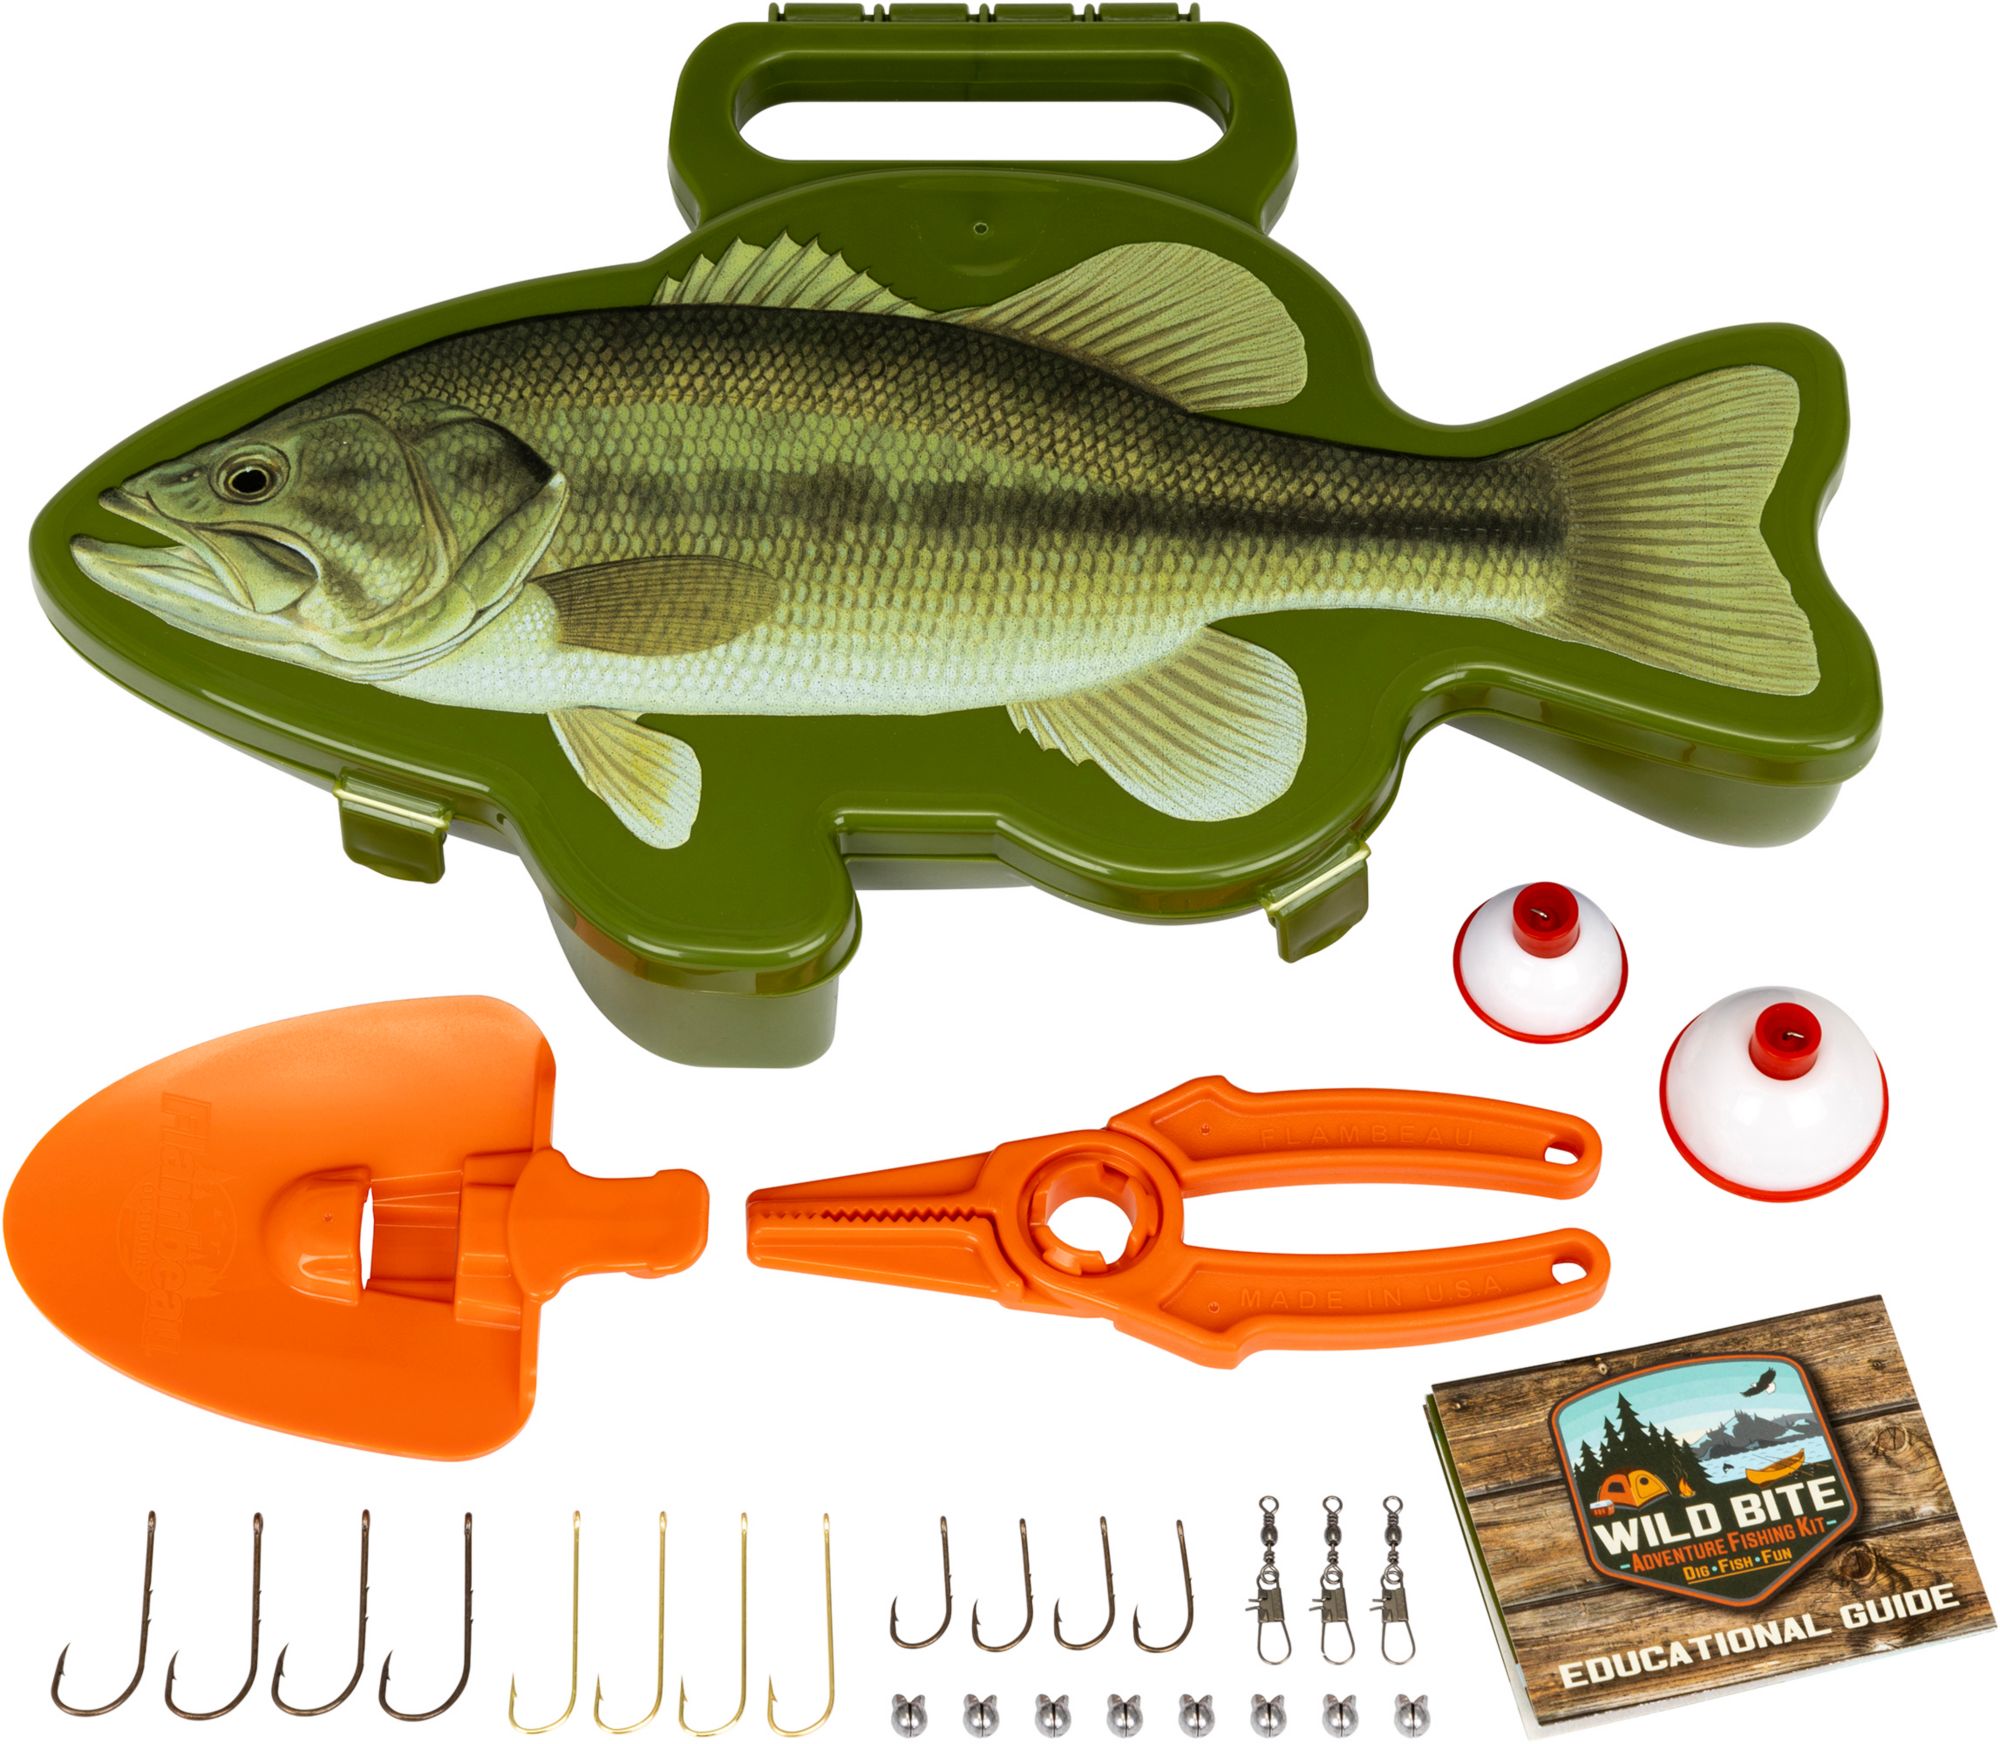 Flambeau Wild Bite Adventure Bass Fishing Kit